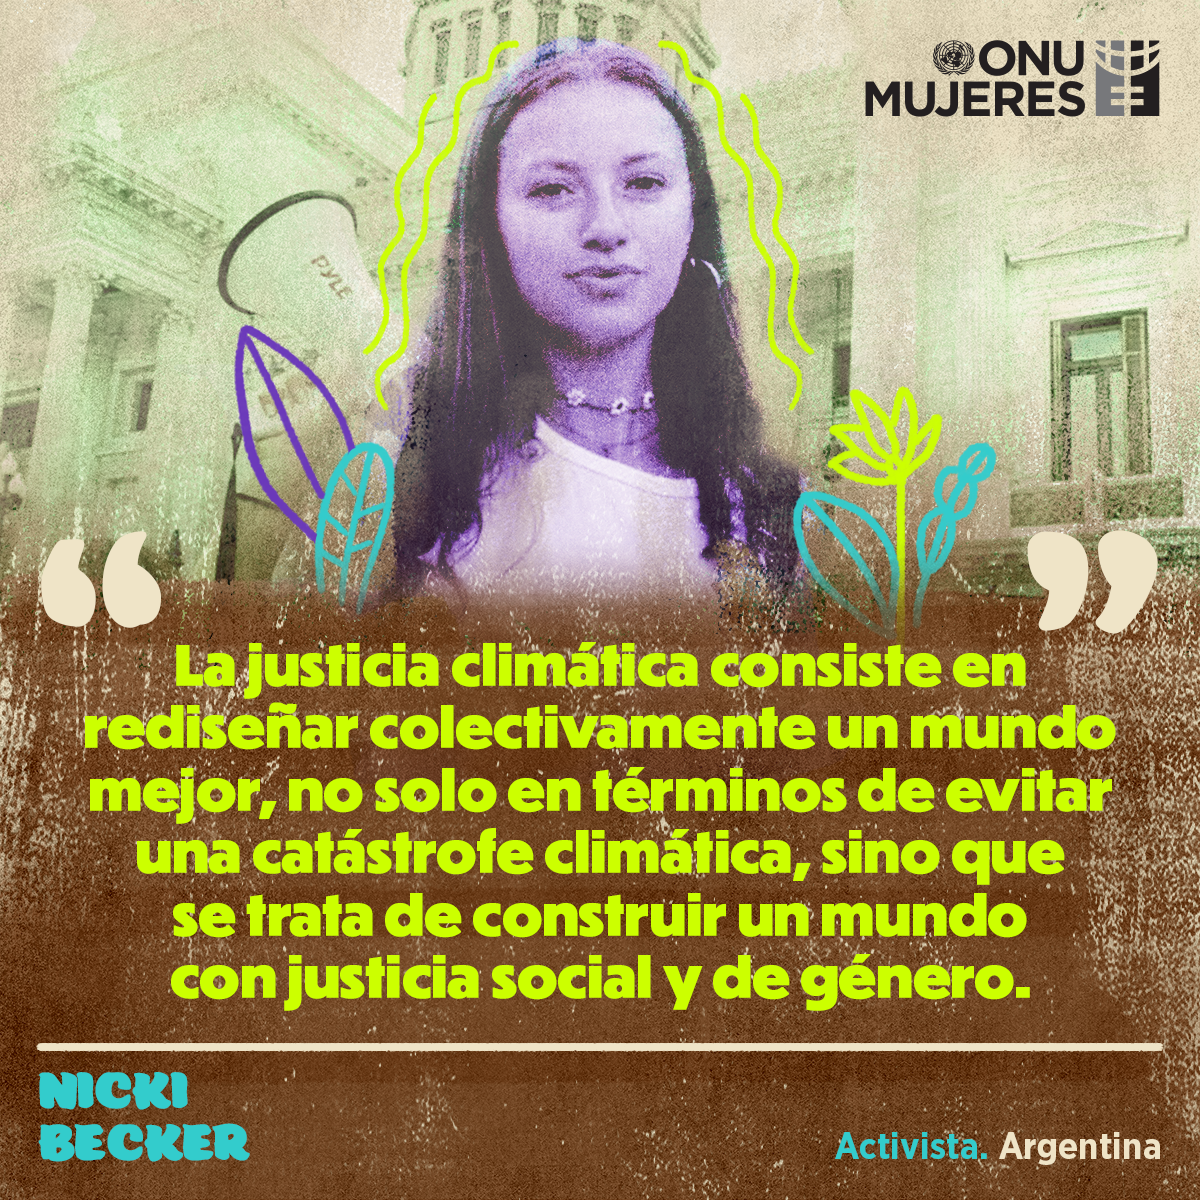 ES-Quote-Argentina-NickiBecker-8M-UNW